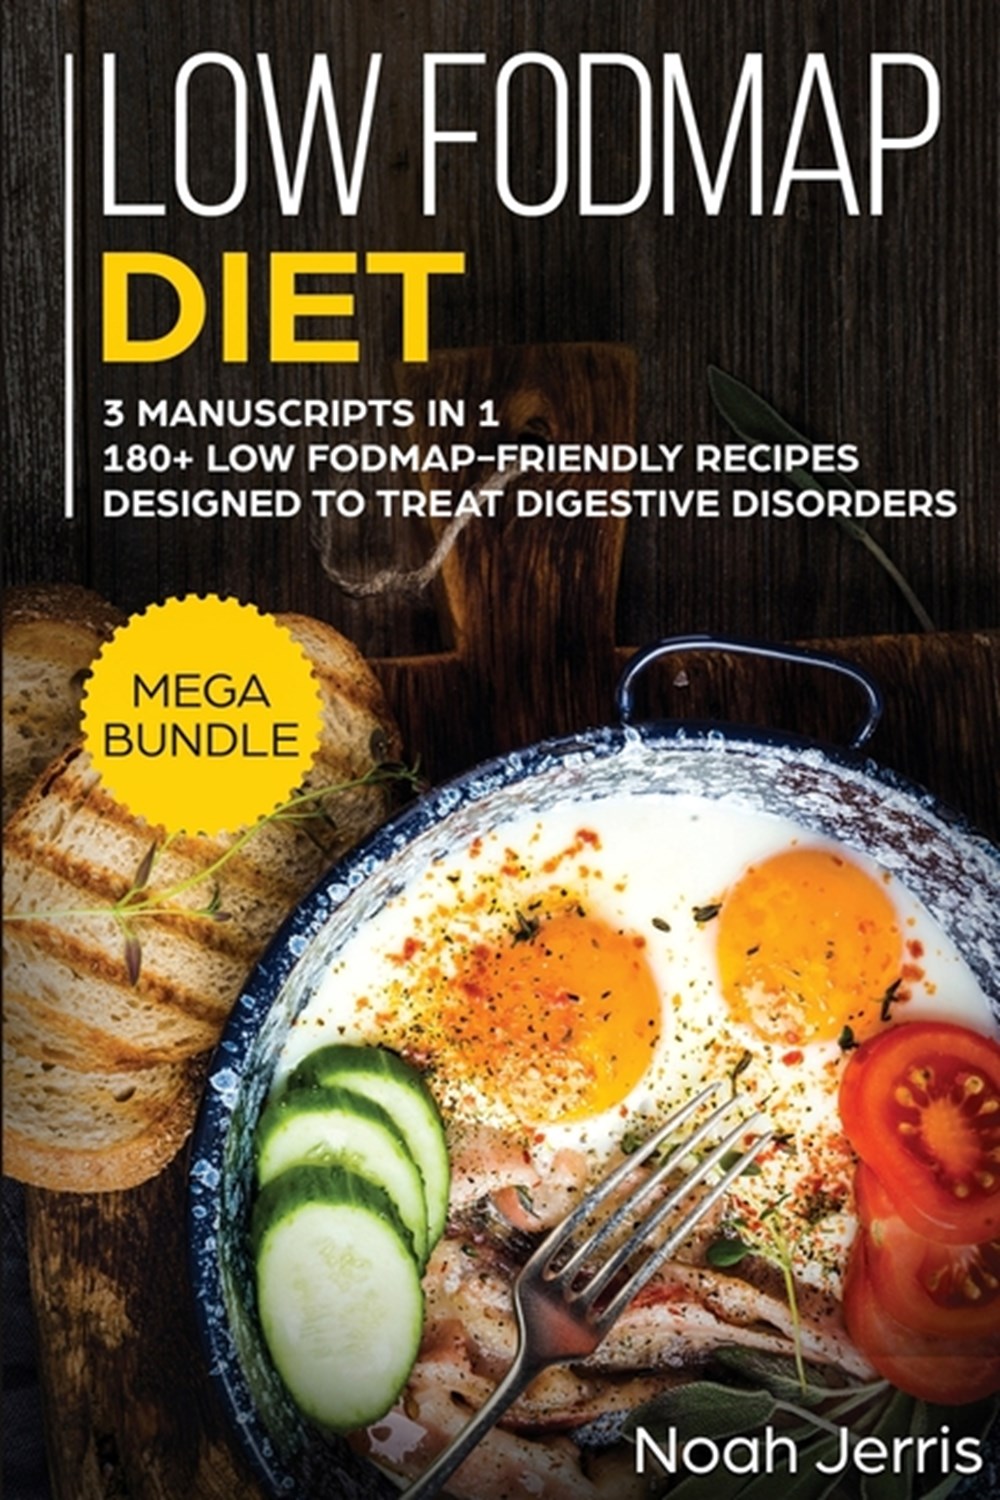 Low-FODMAP Diet: MEGA BUNDLE - 3 Manuscripts in 1 - 180+ Low Fodmap-Friendly Recipes Designed to Tre